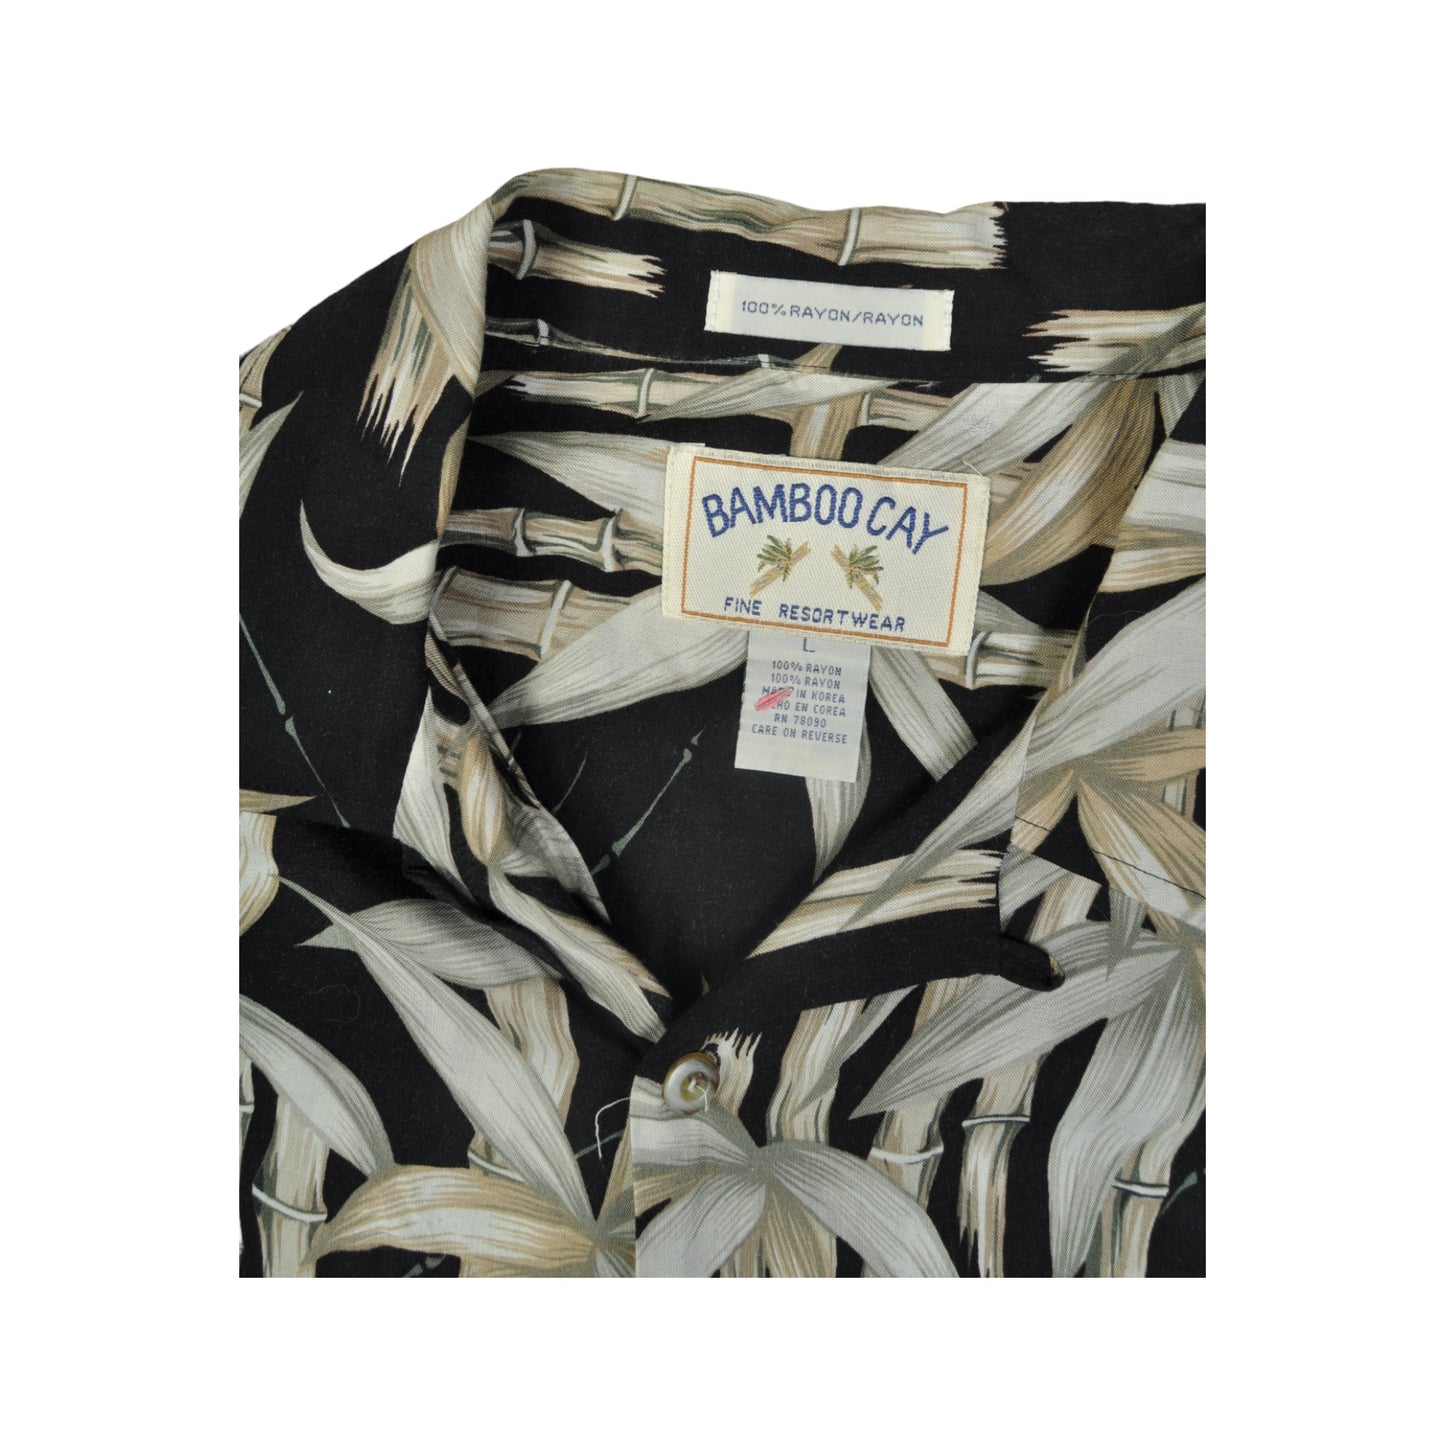 Vintage Tropical Print Shirt Short Sleeve Black Large